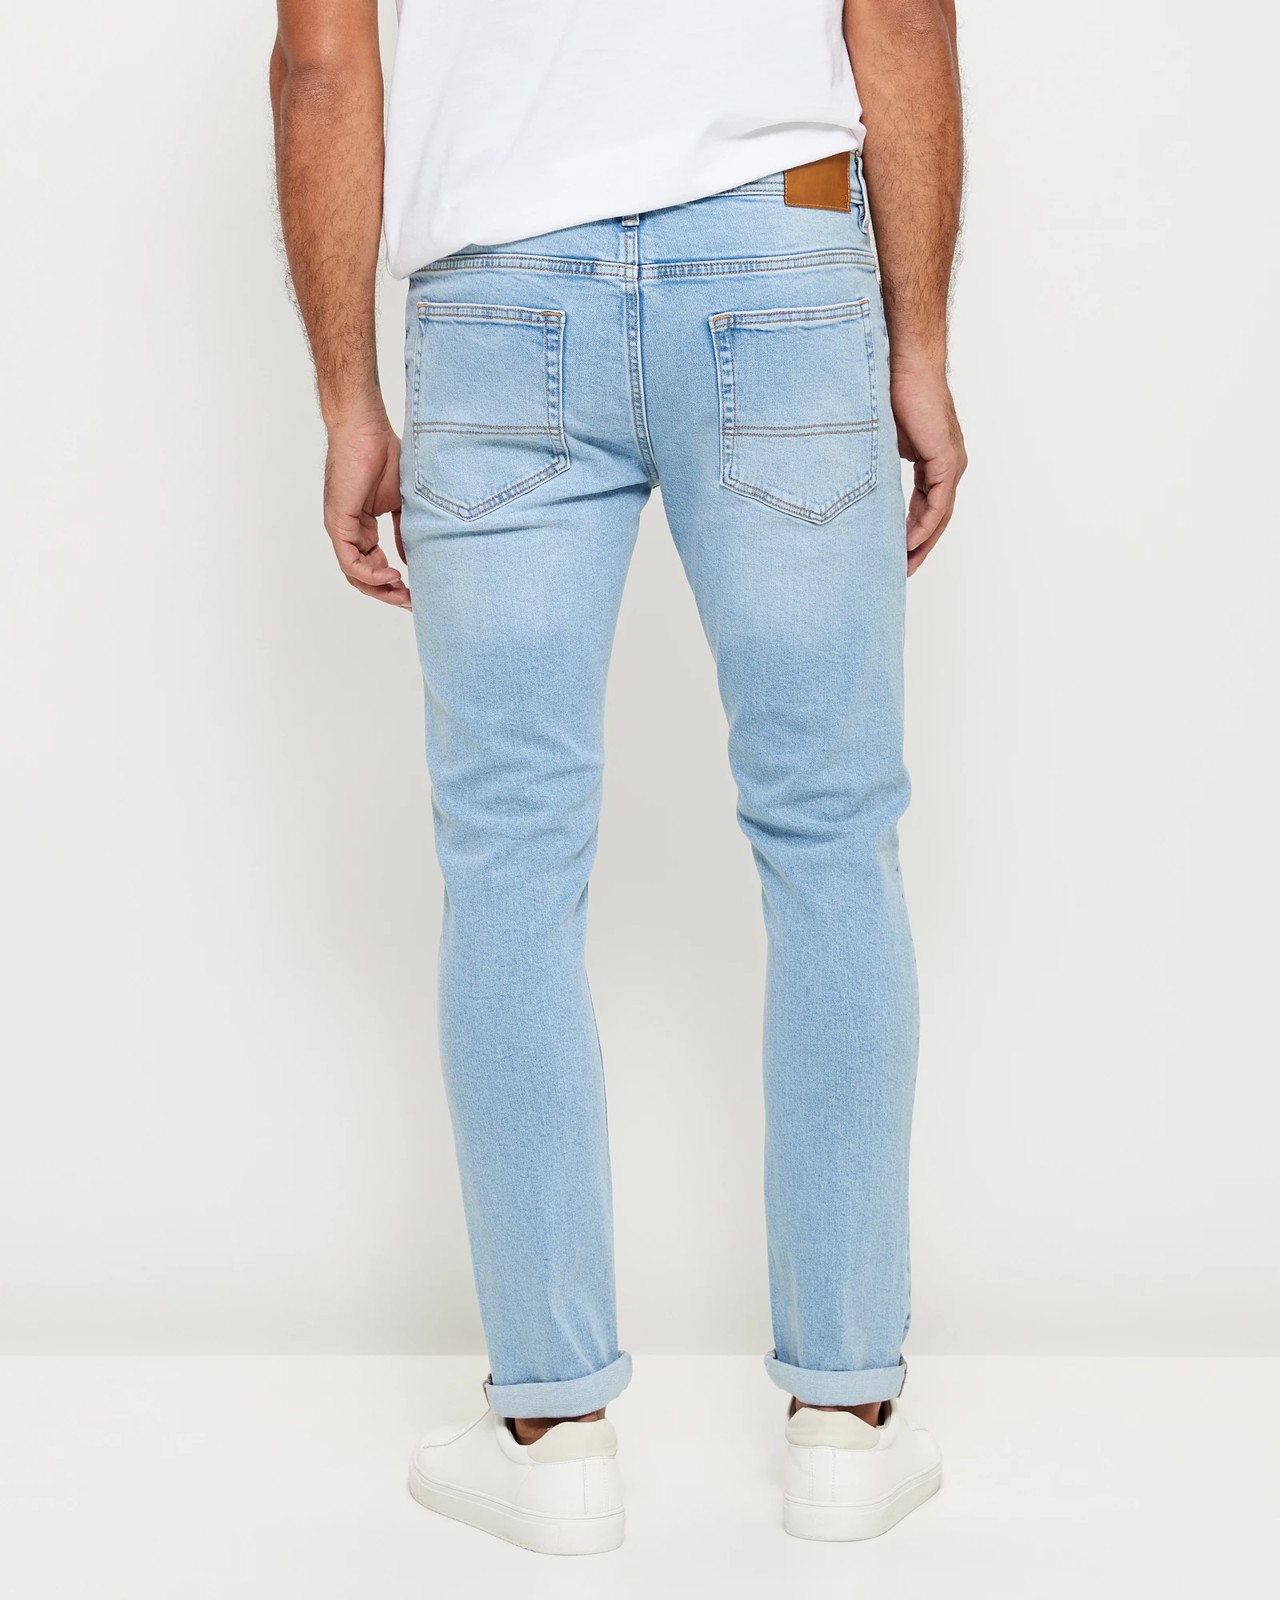 Phoenix Slim Jeans | Target Australia